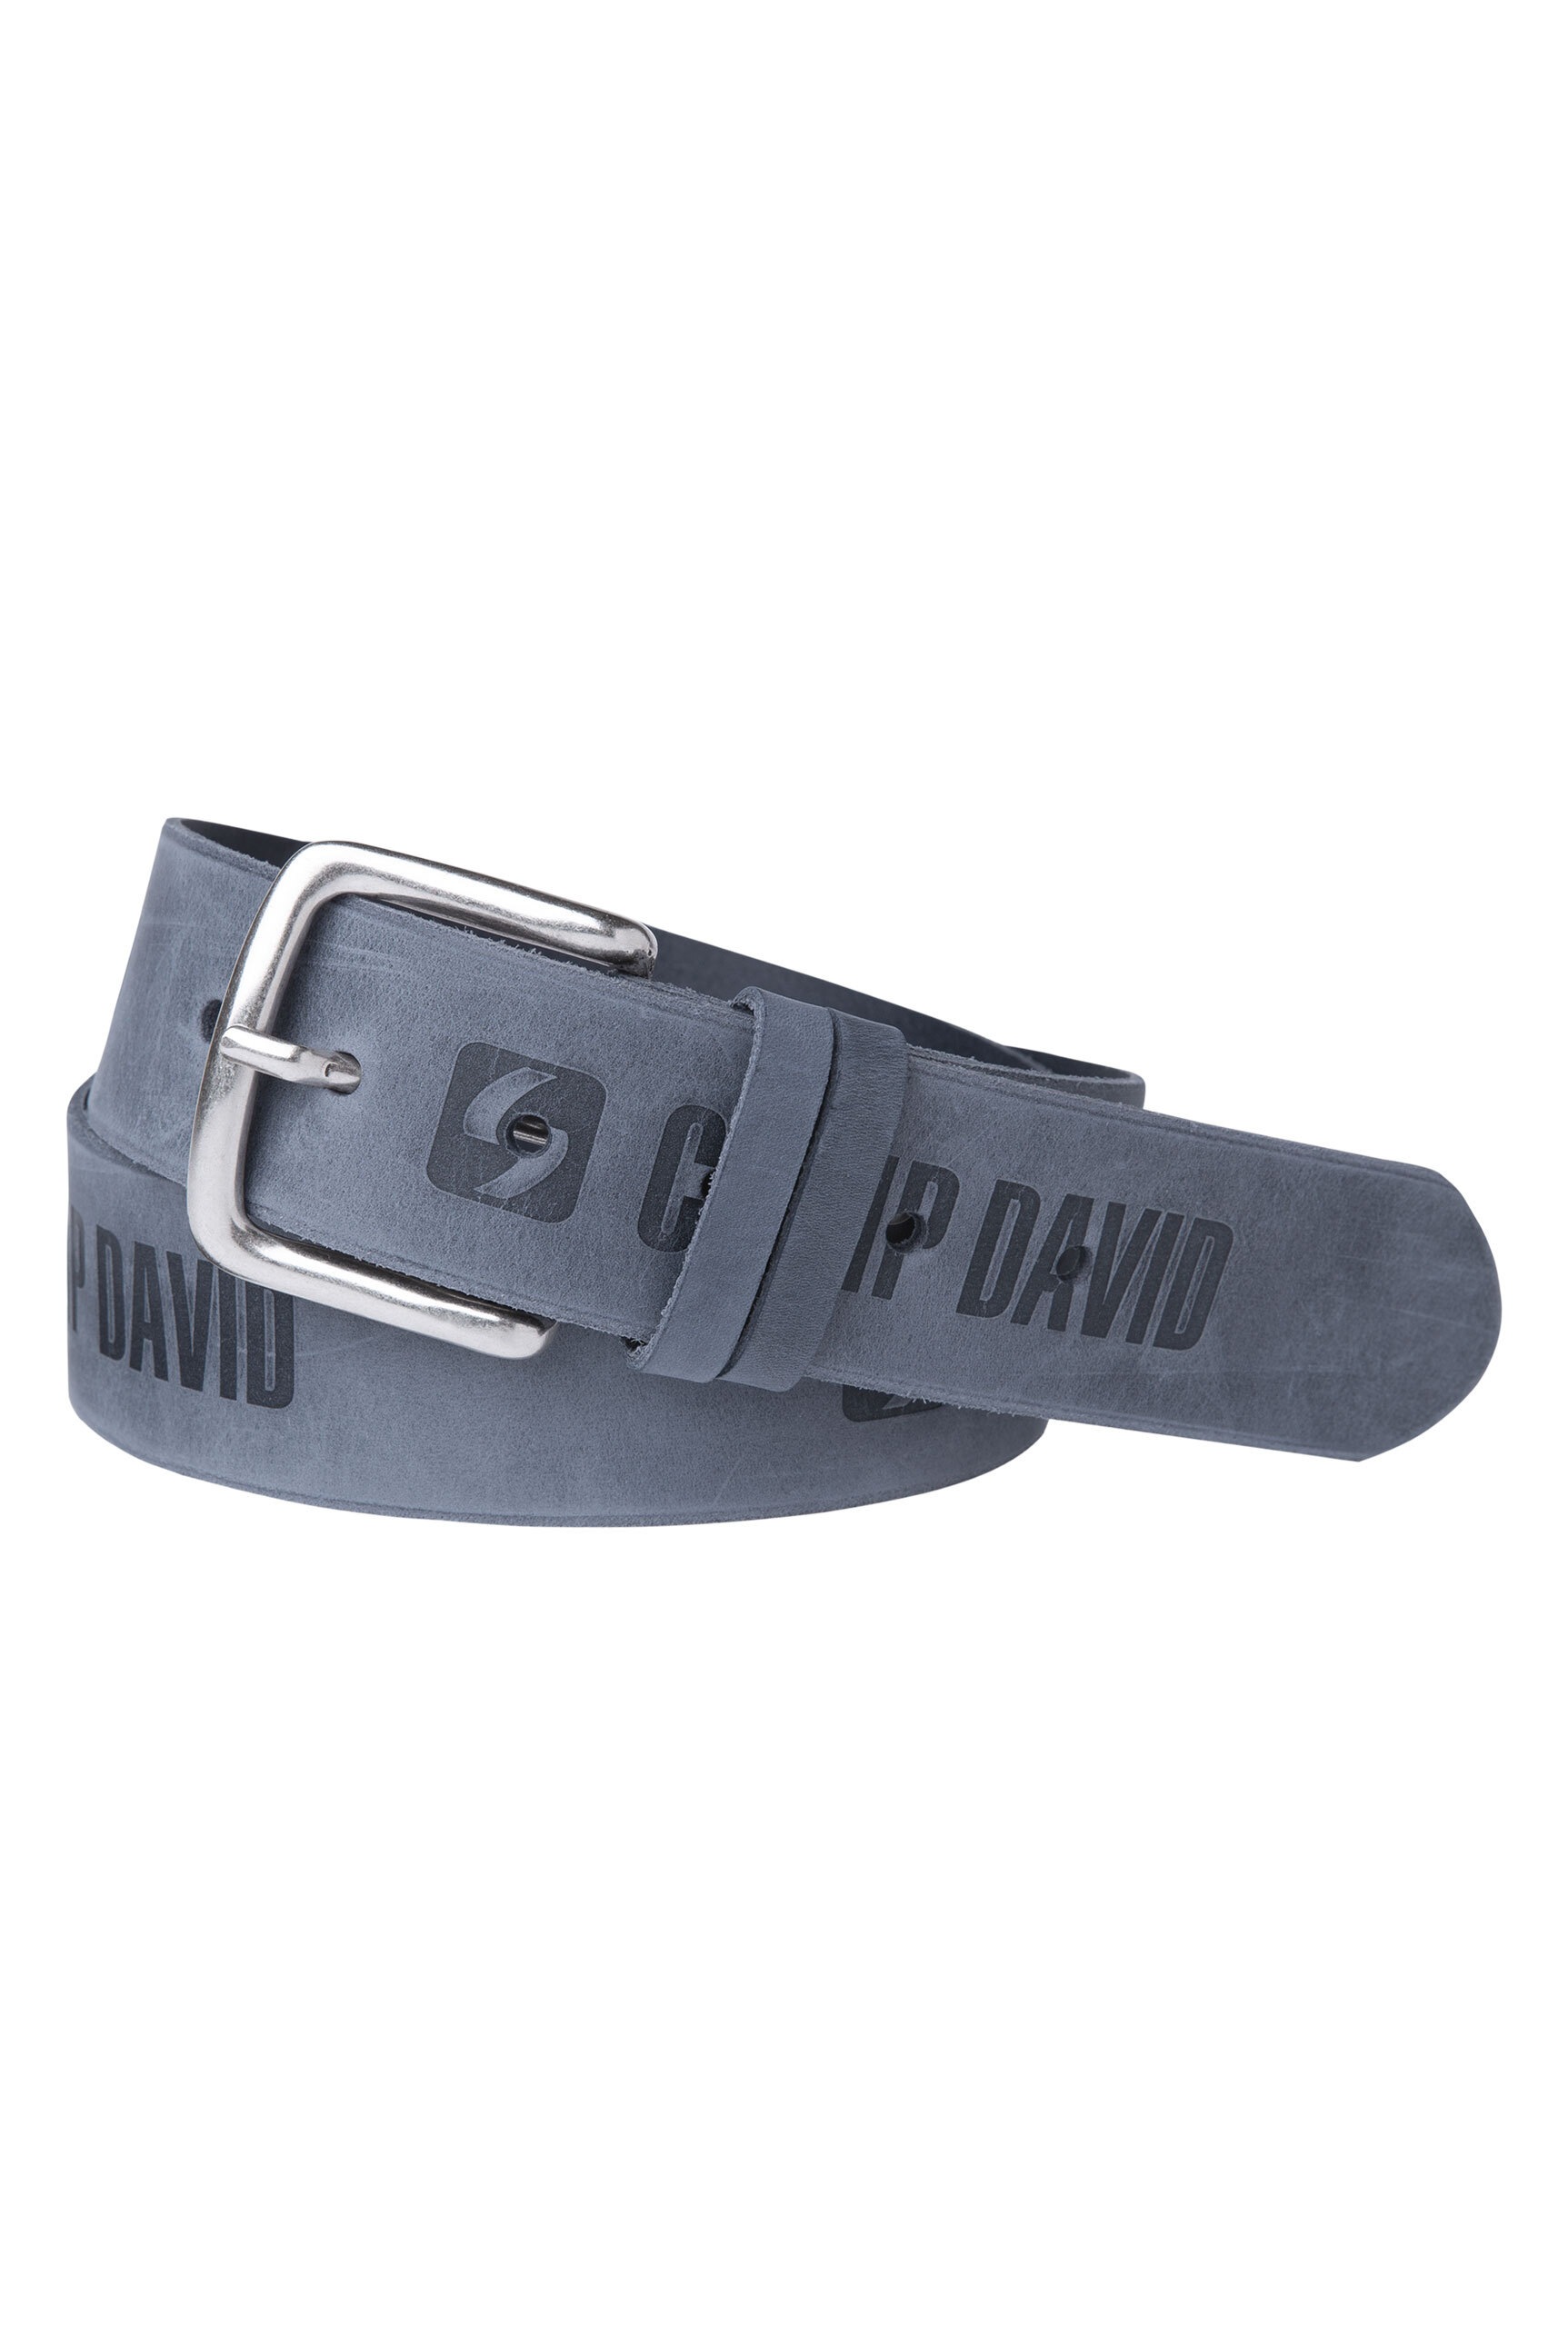 CAMP DAVID Ledergürtel, mit Used-Optik online kaufen | I'm walking